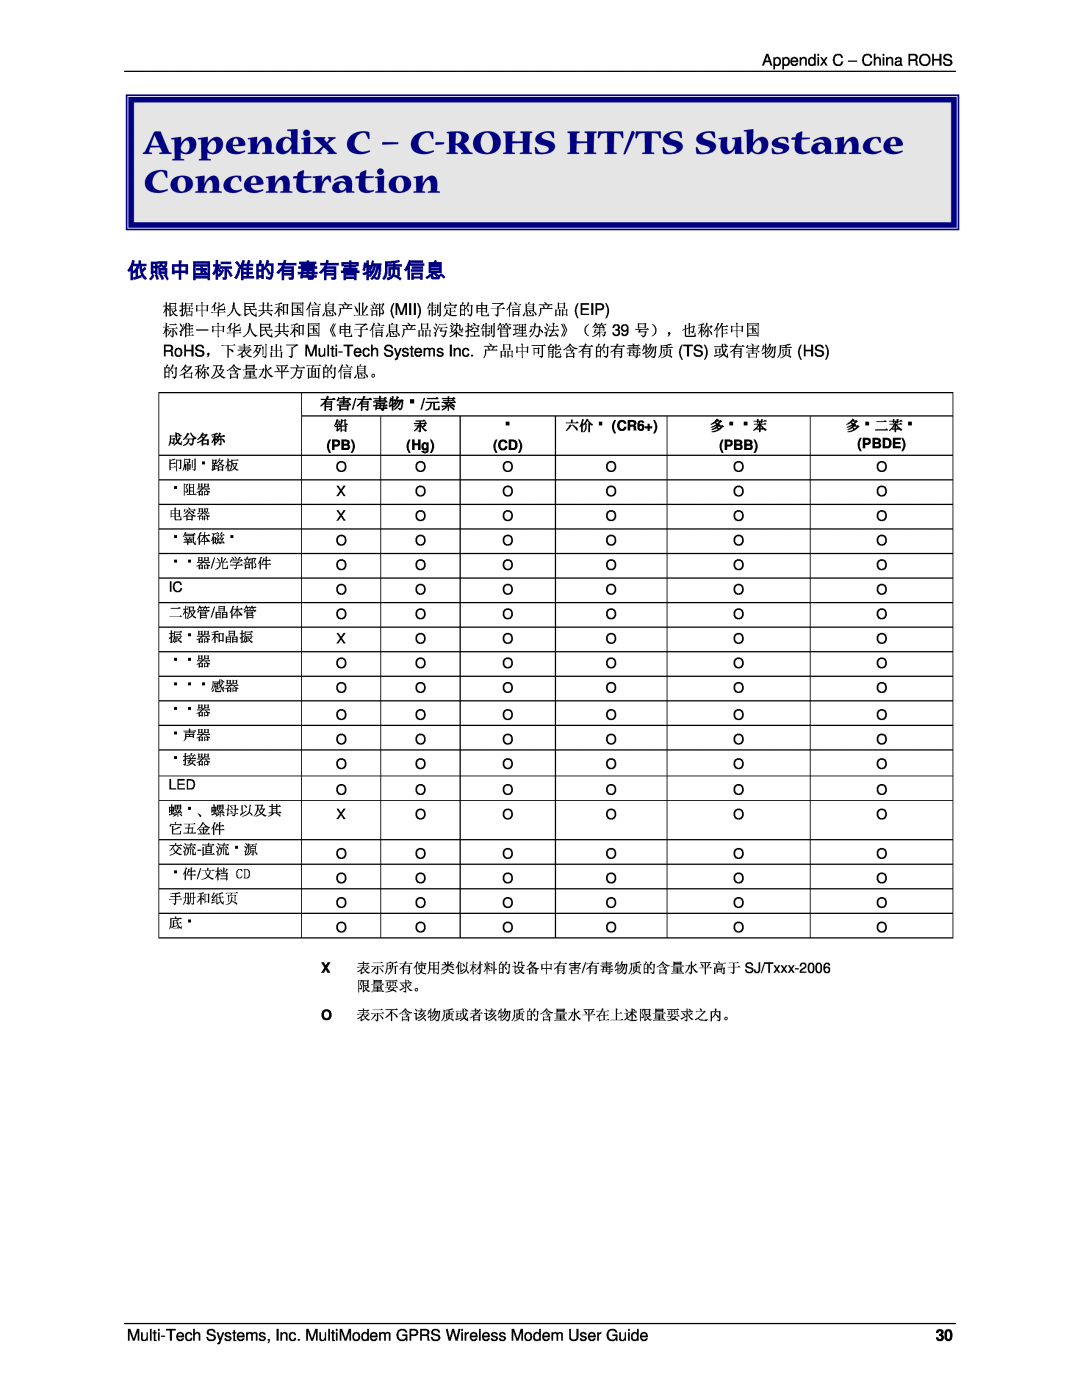 Multi-Tech Systems MTCBA-G-F4 Appendix C - C-ROHS HT/TS Substance Concentration, 依照中国标准的有毒有害物质信息, 的名称及含量水平方面的信息。, 成分名称 